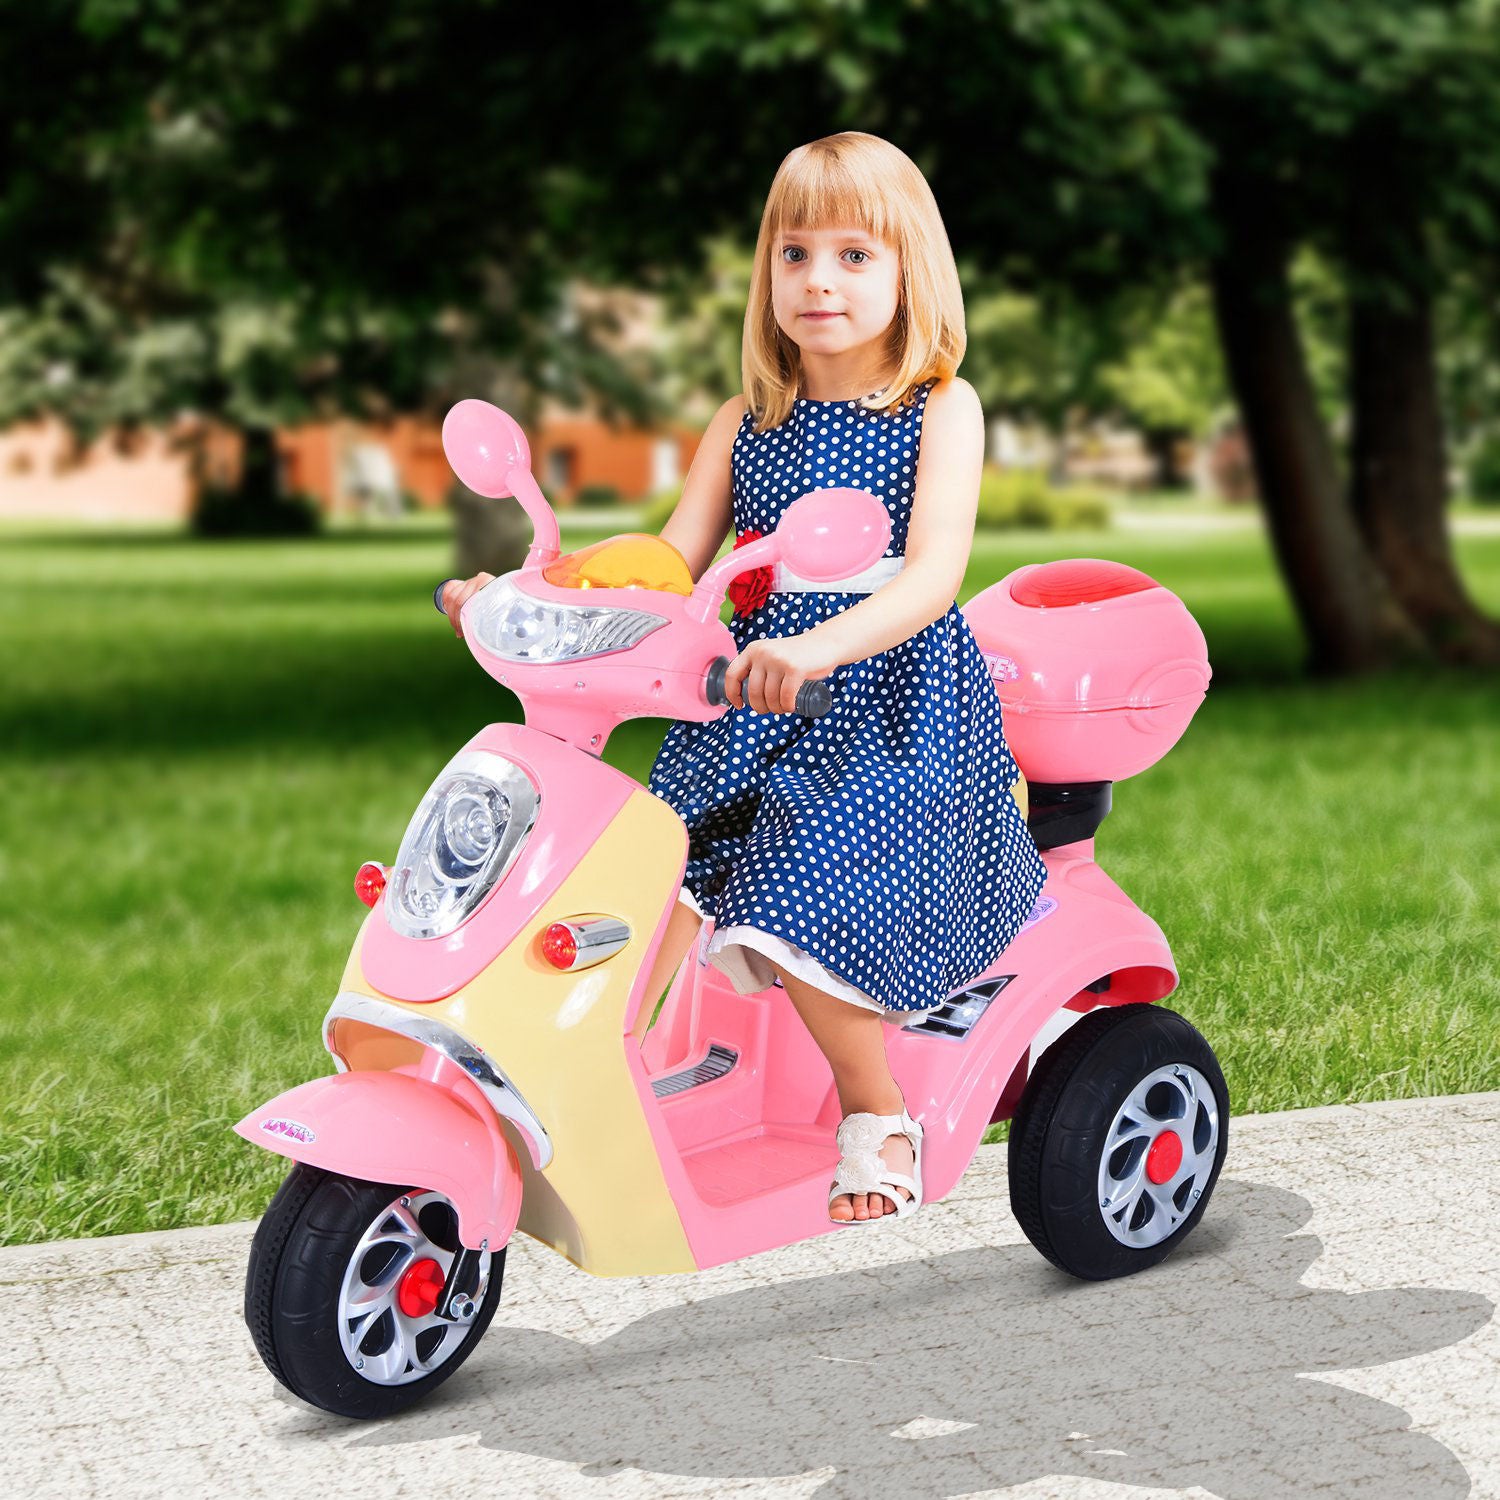 Nancy's Cay Corker Electric Children's Motorcycle - Pink, Yellow - L108 x W51 x H75cm